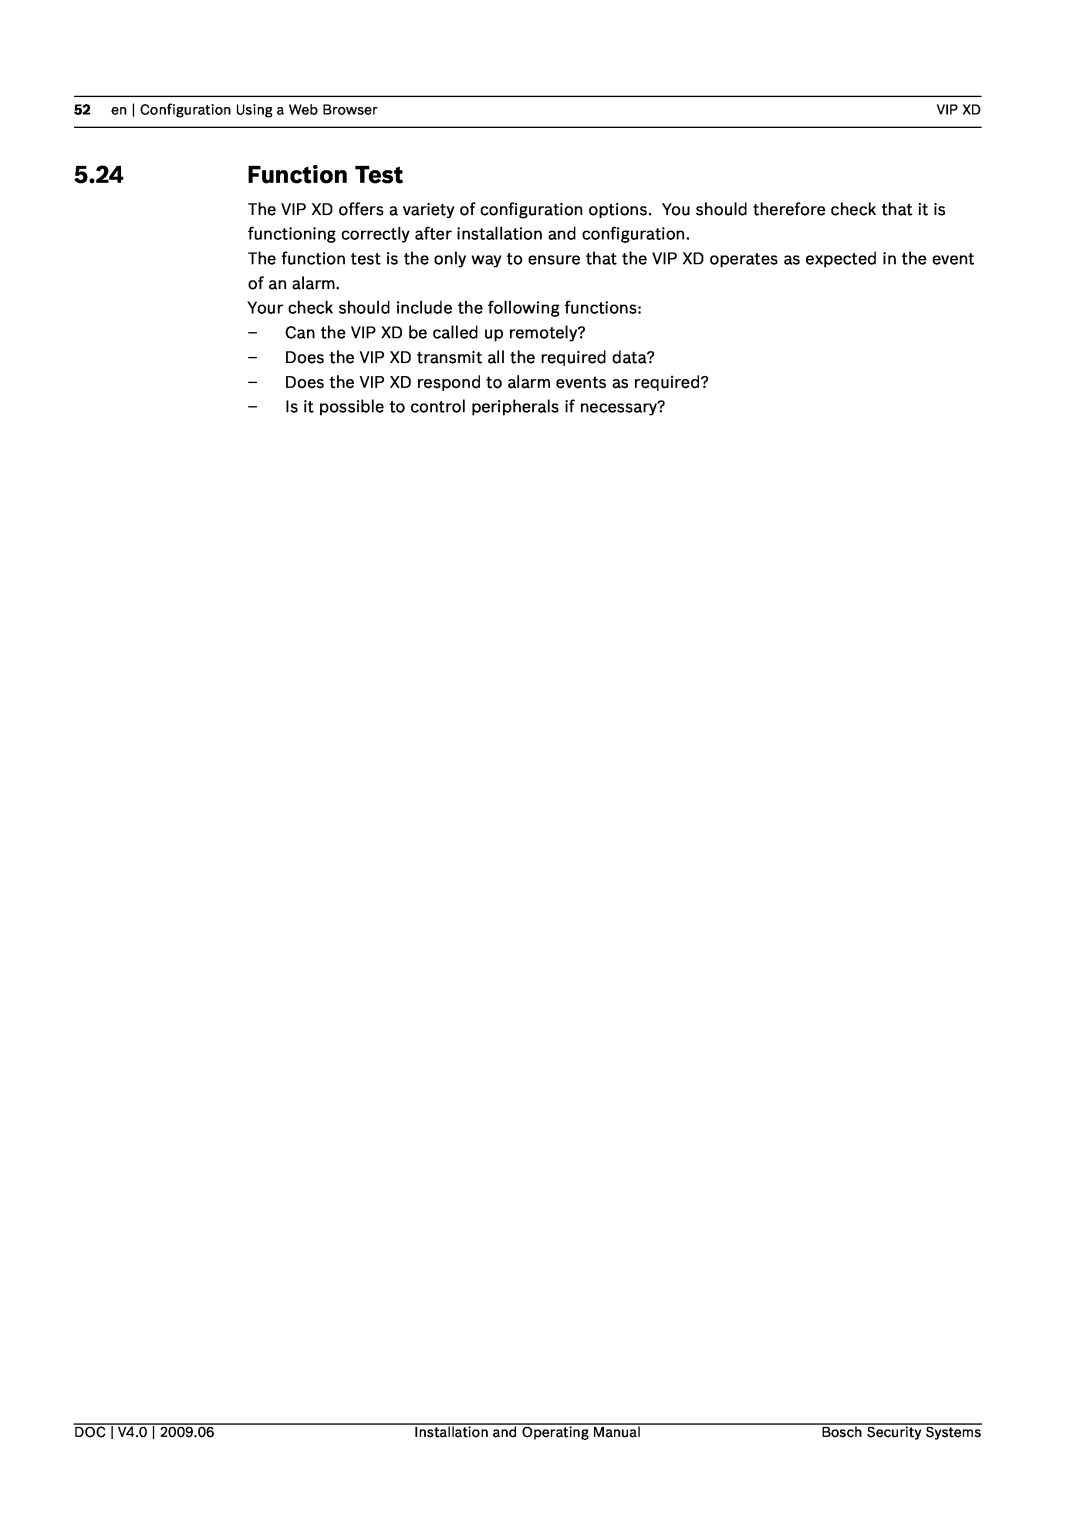 Bosch Appliances XD, VIP manual 5.24, Function Test 